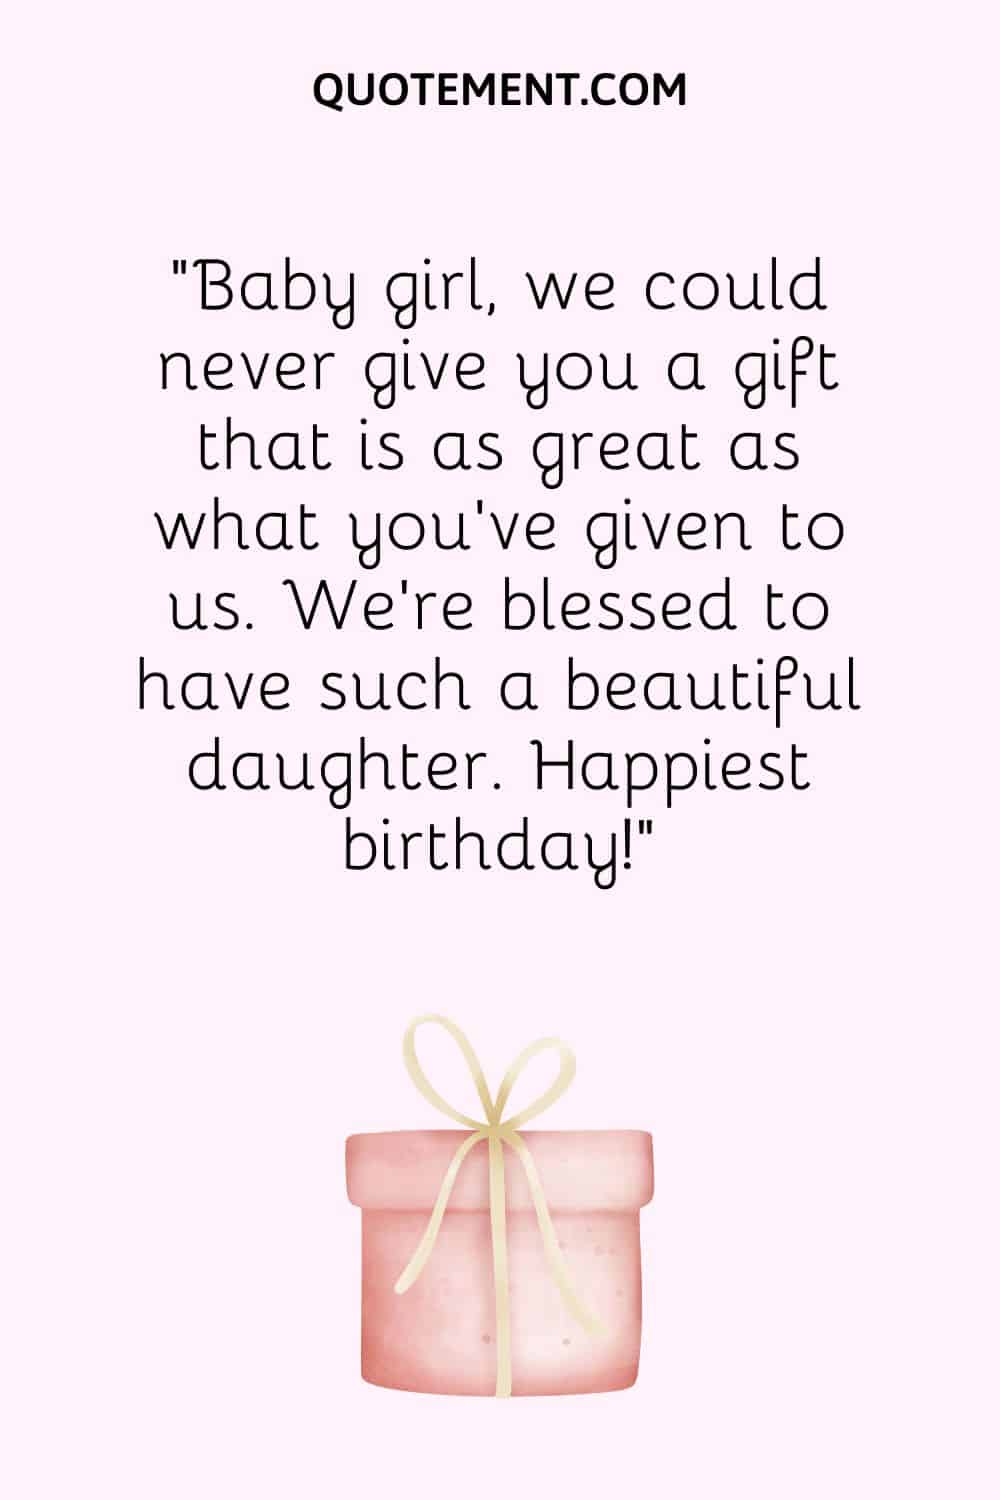 happy baby girl quotes